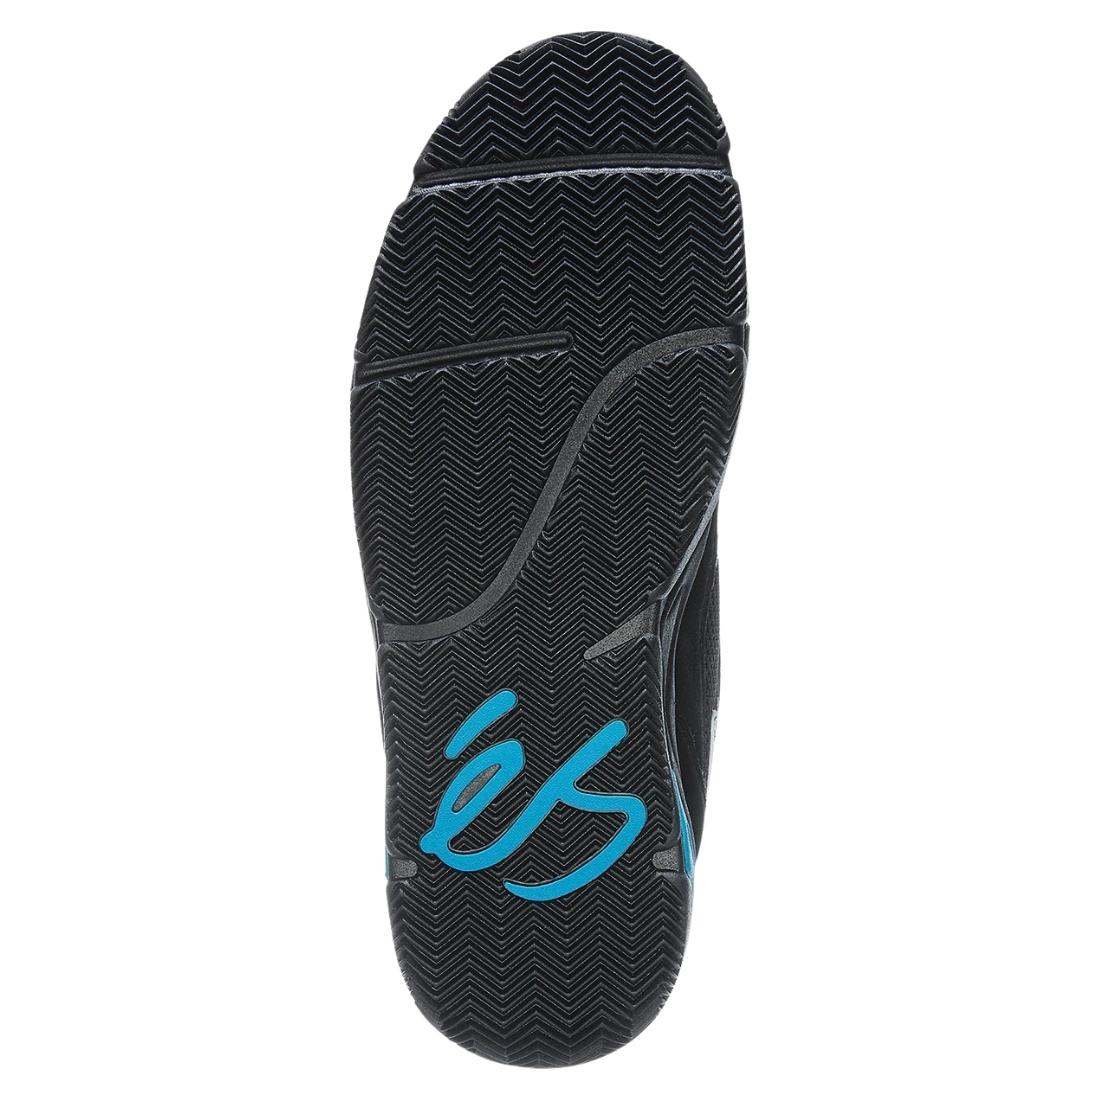 Es Quattro Plus Skate Shoes - Black/Teal - Mens Skate Shoes by eS